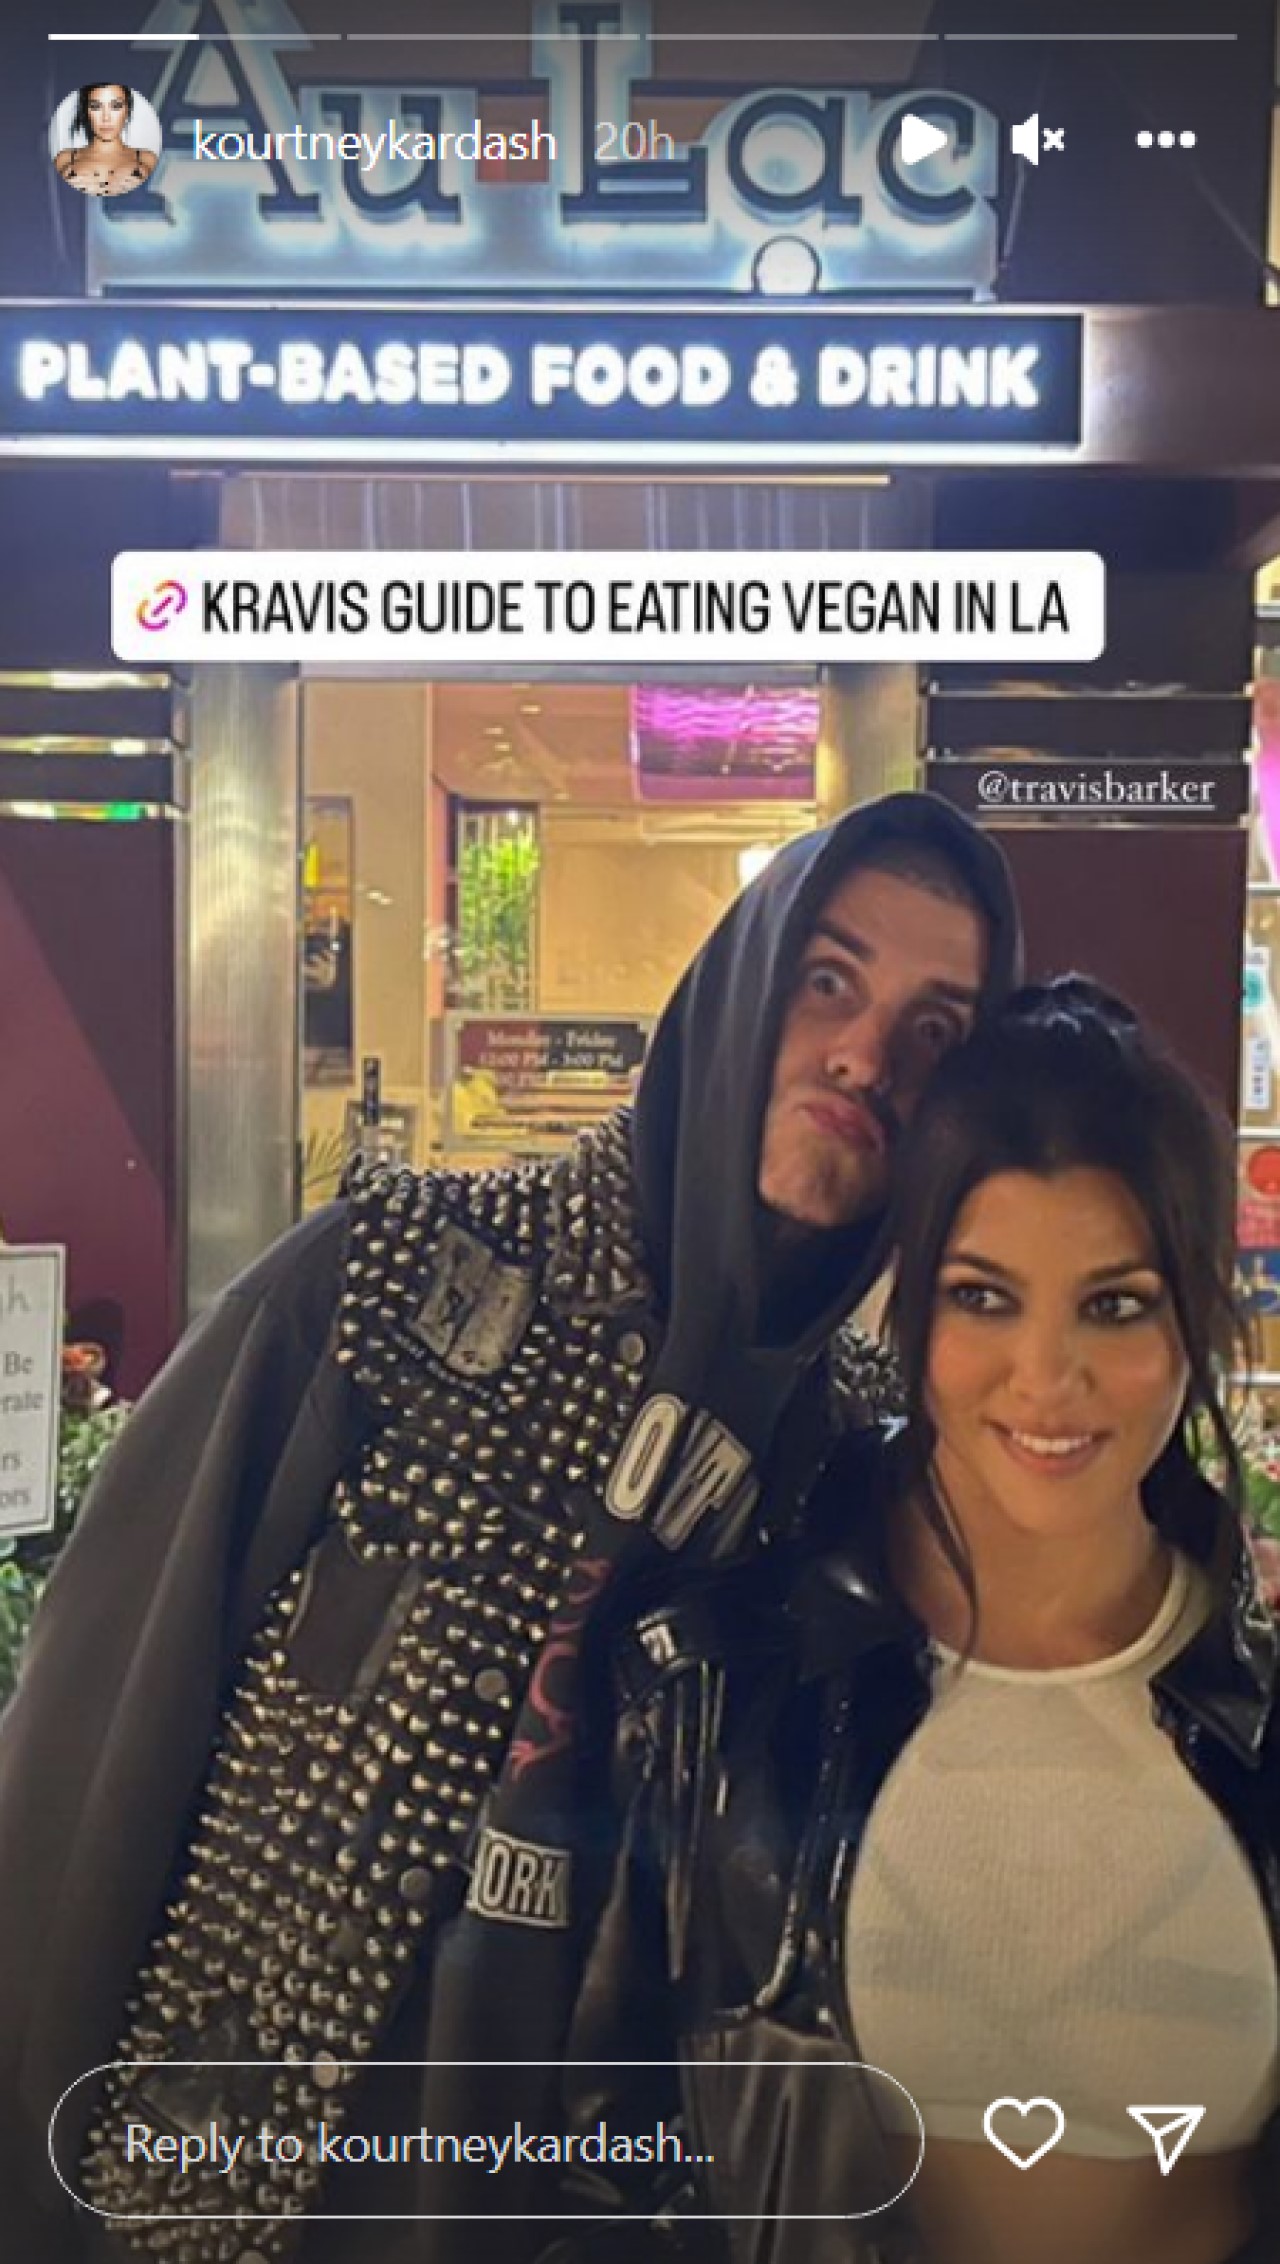 Kourtney Kardashian shares a photo of her and Travis Barker on Instagram.